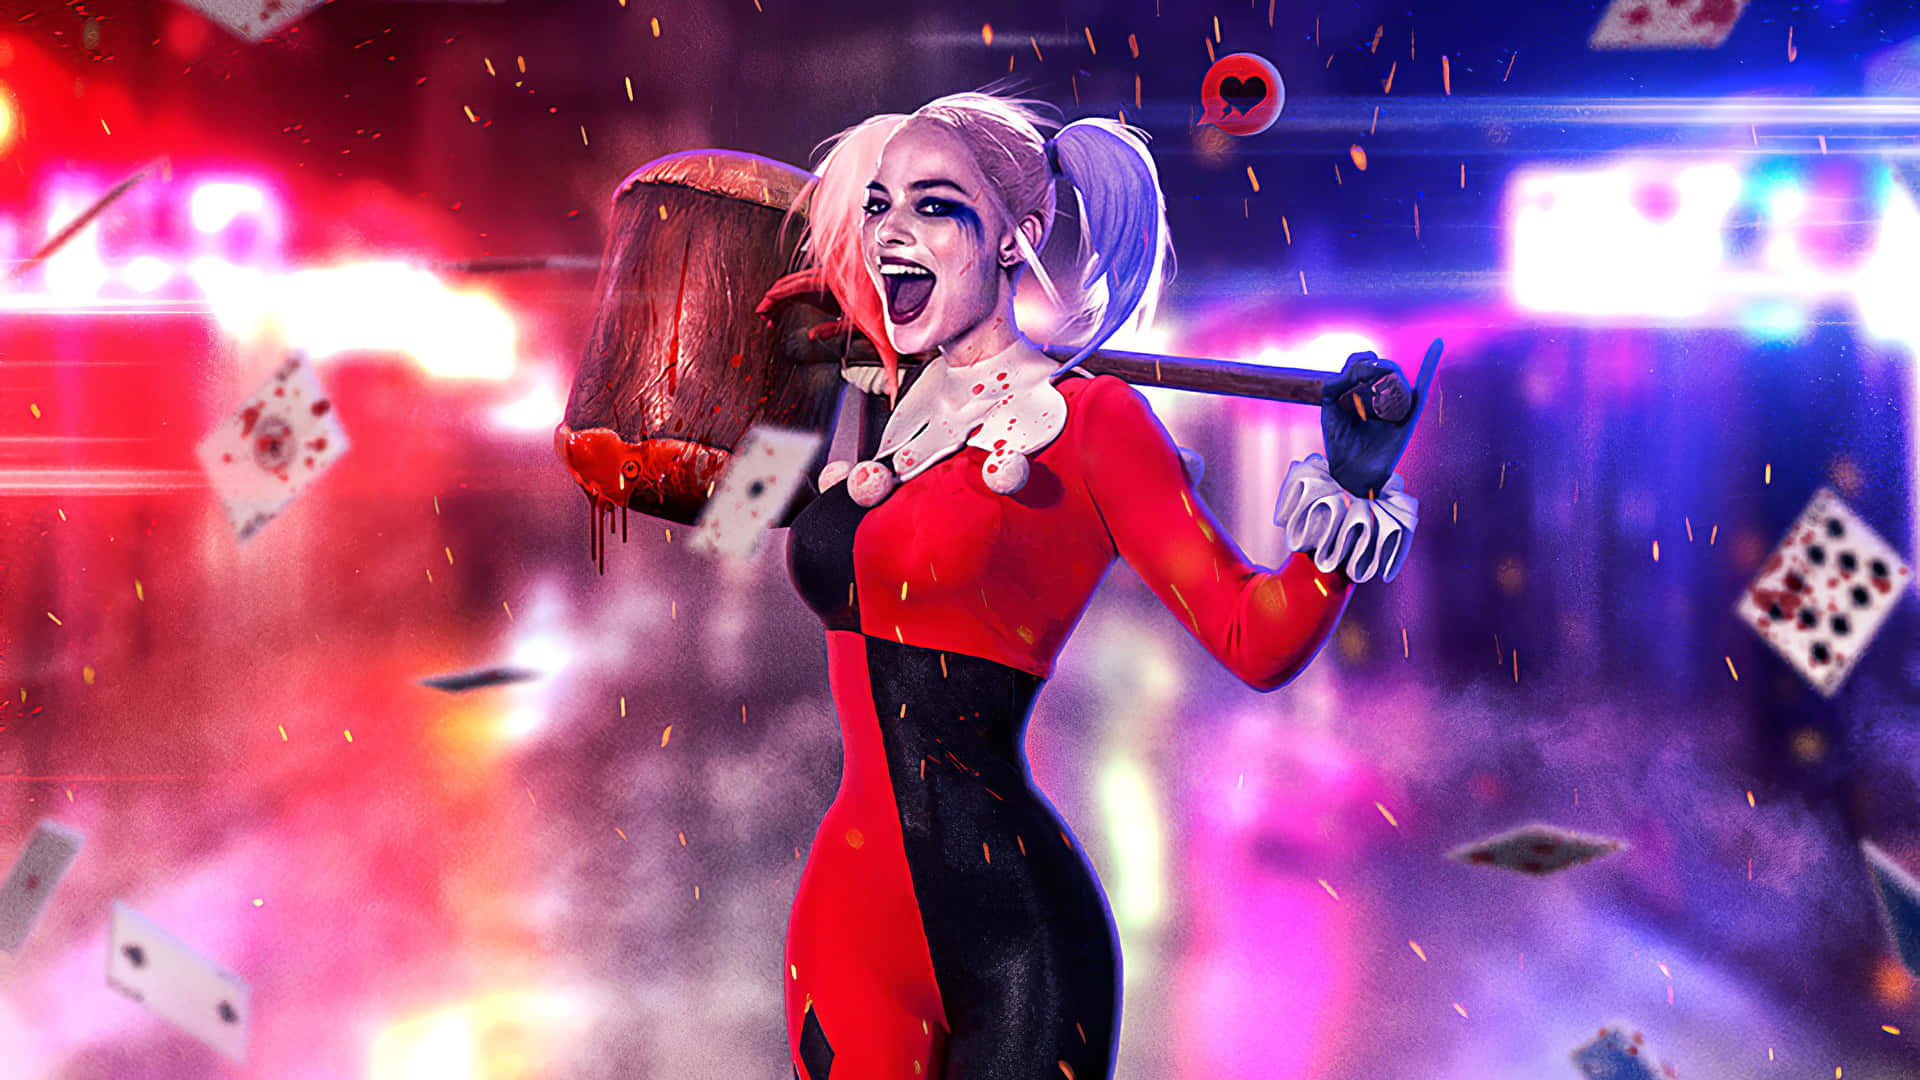 Harley Quinn Digital Art Background